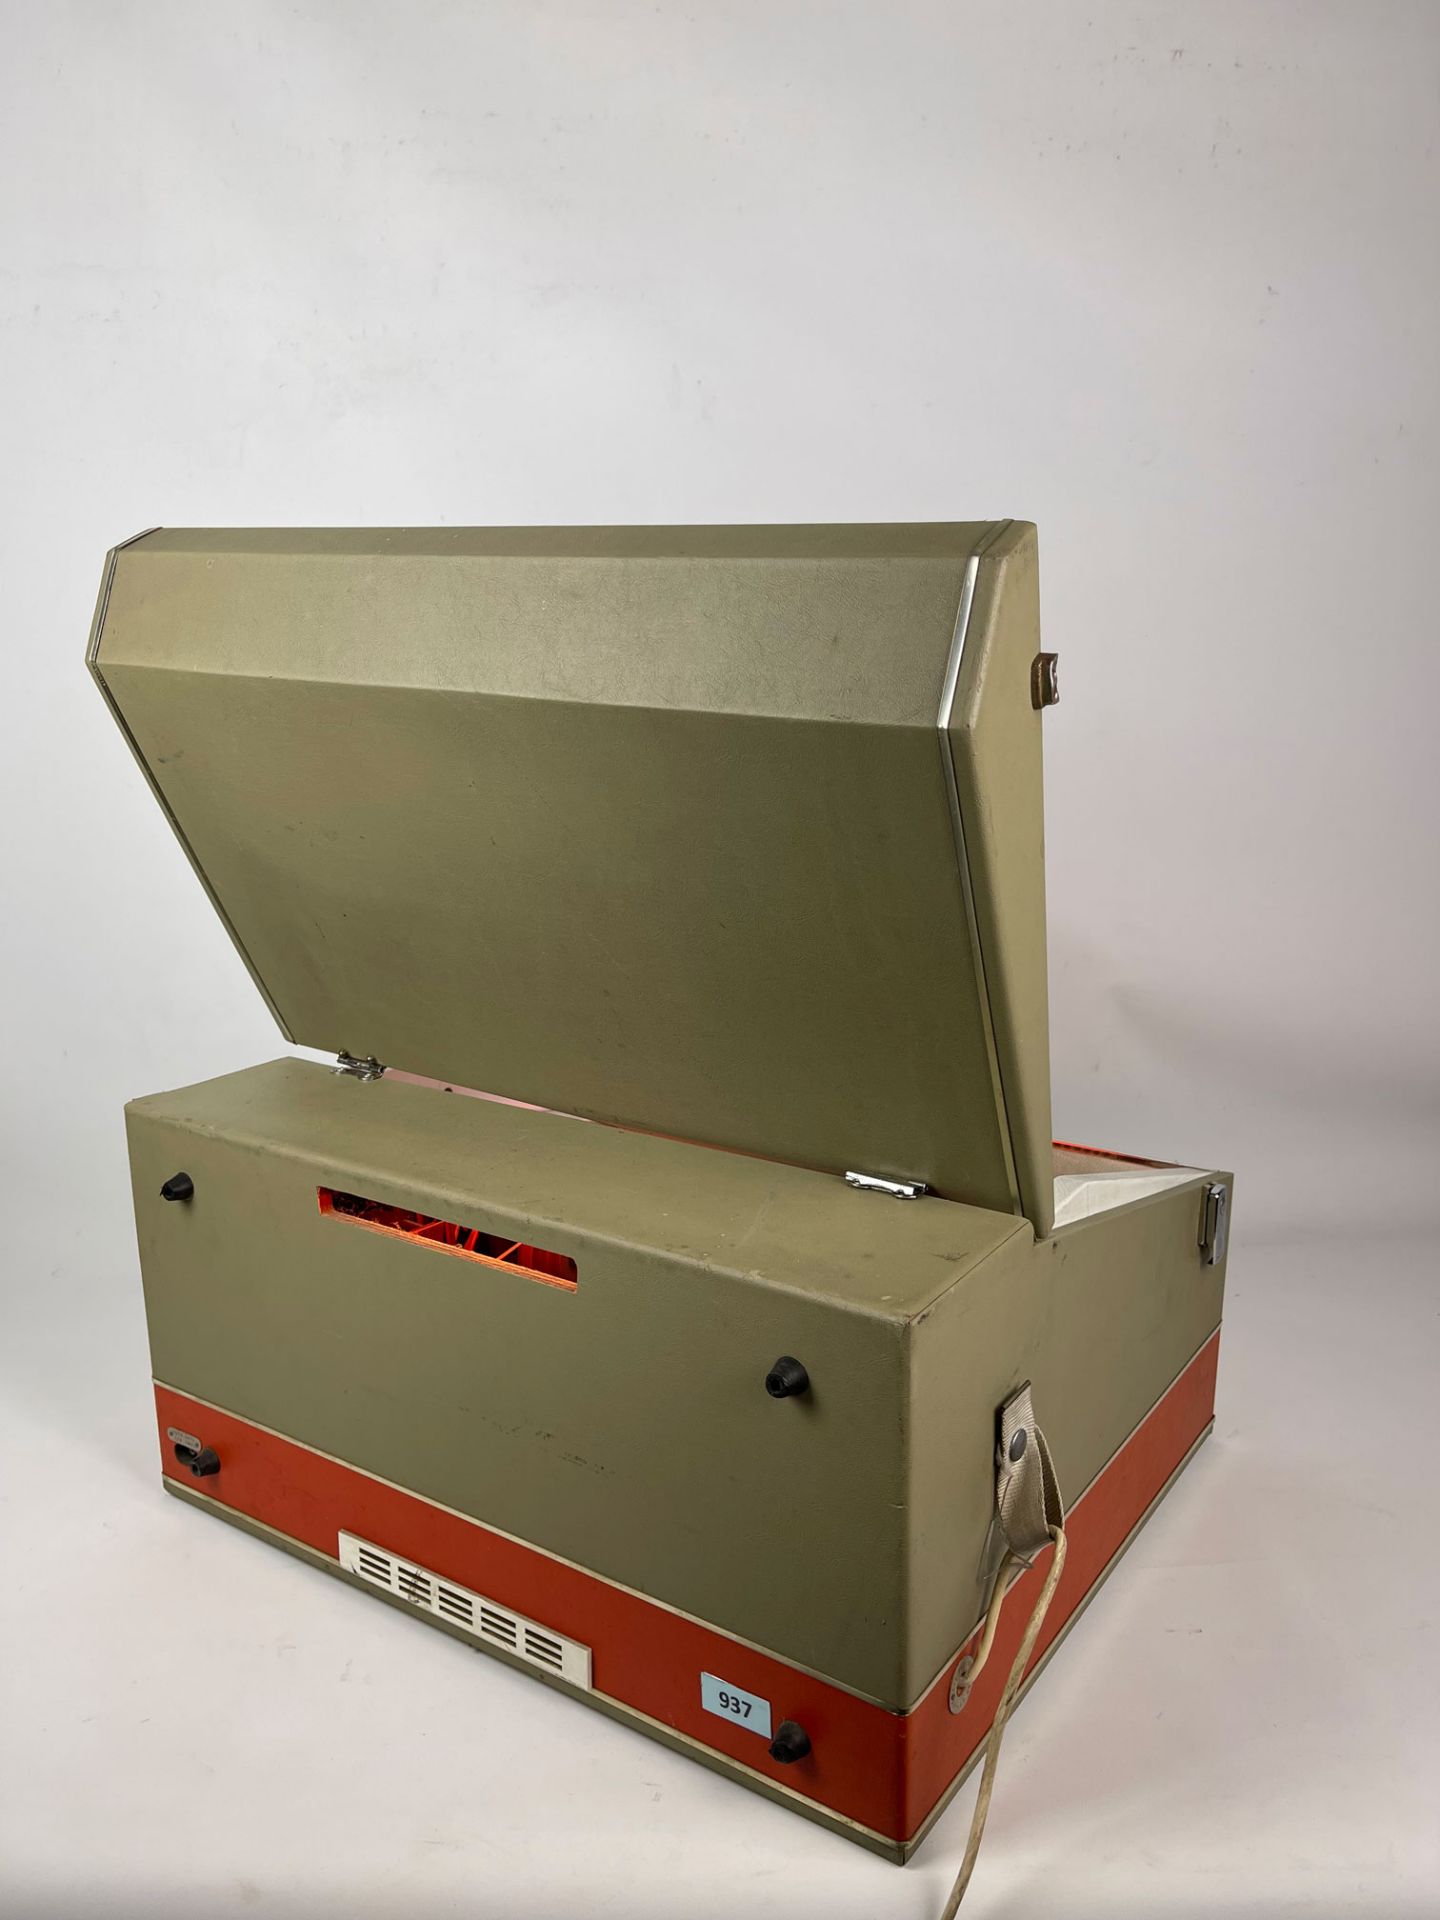 1965 Kolster-Brandes KB Discomatic Portable Jukebox - Image 7 of 11